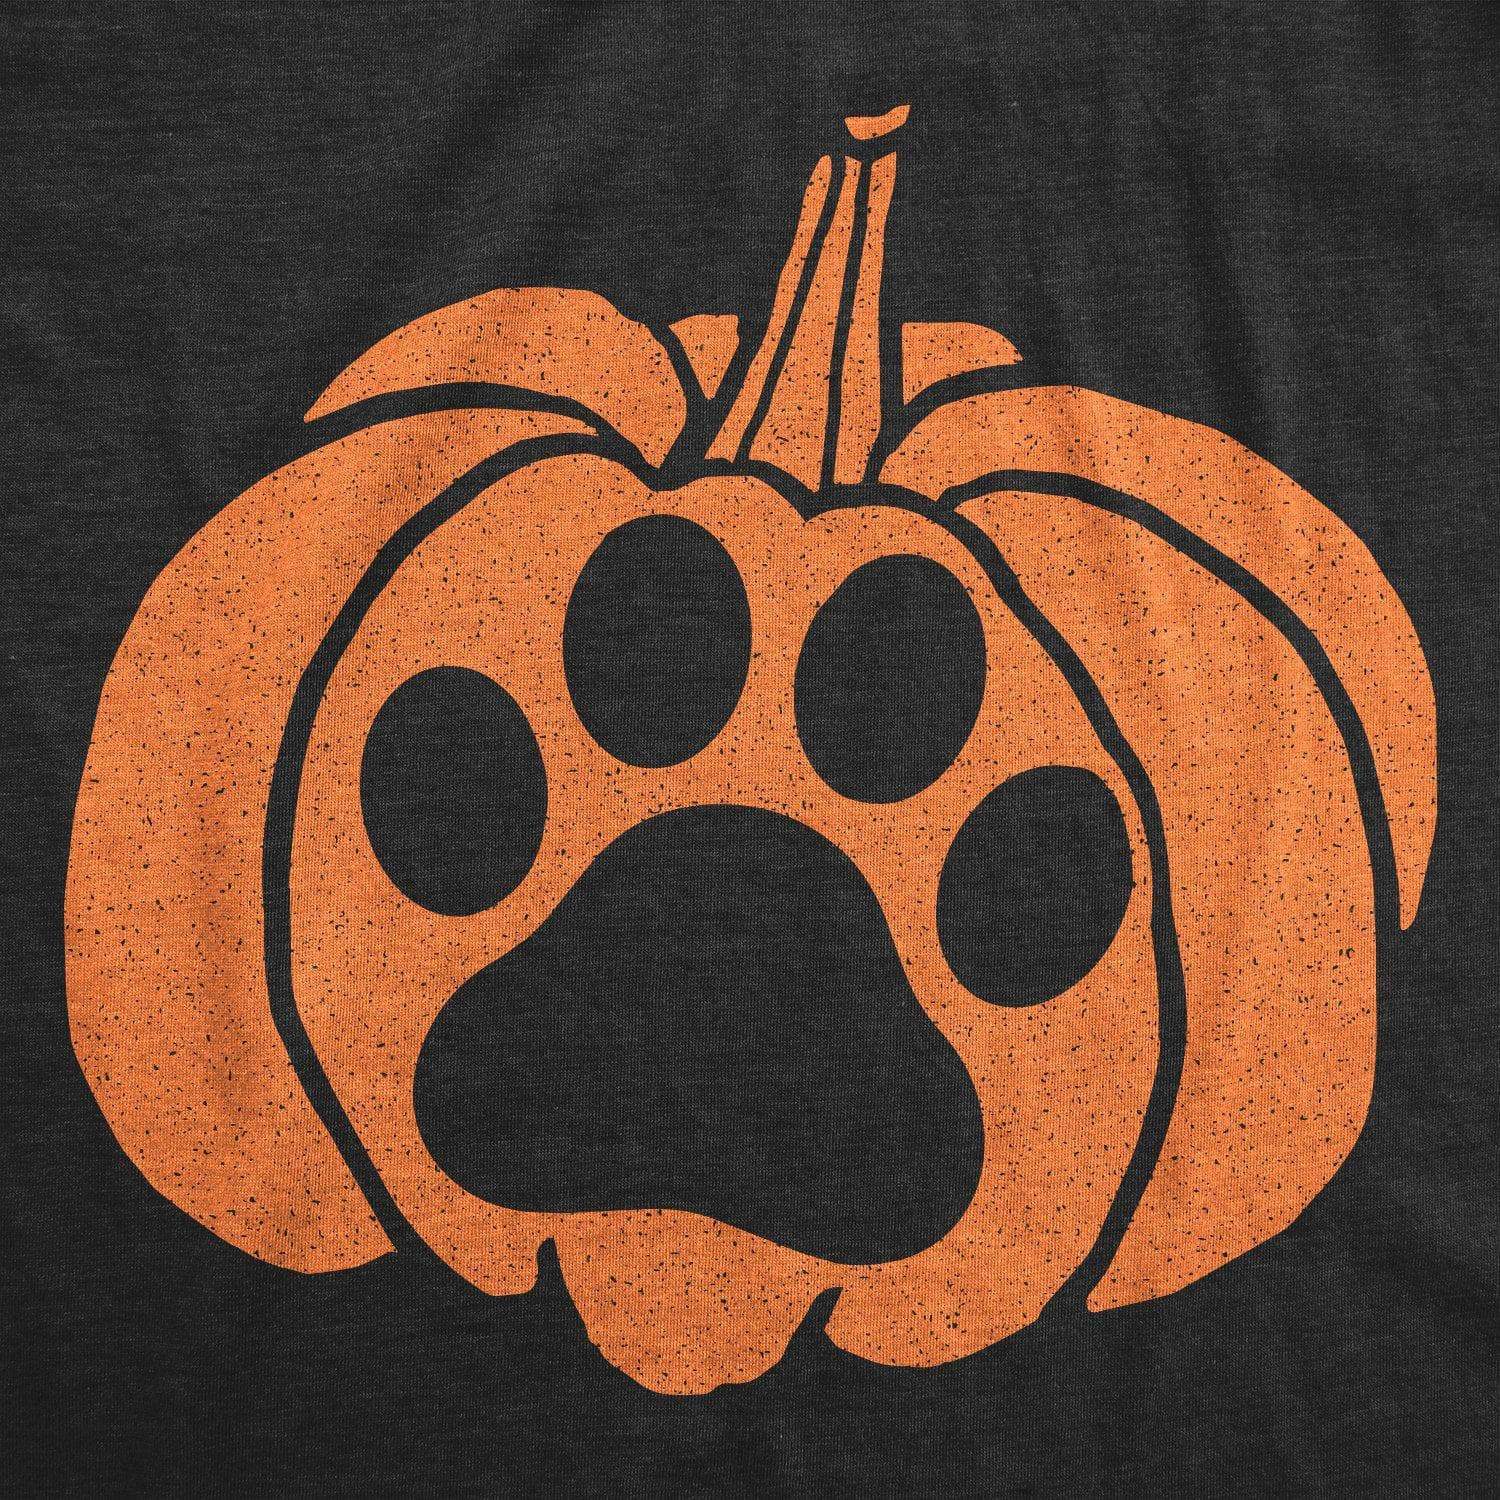 Pumpkin Paw Men's Tshirt - Crazy Dog T-Shirts